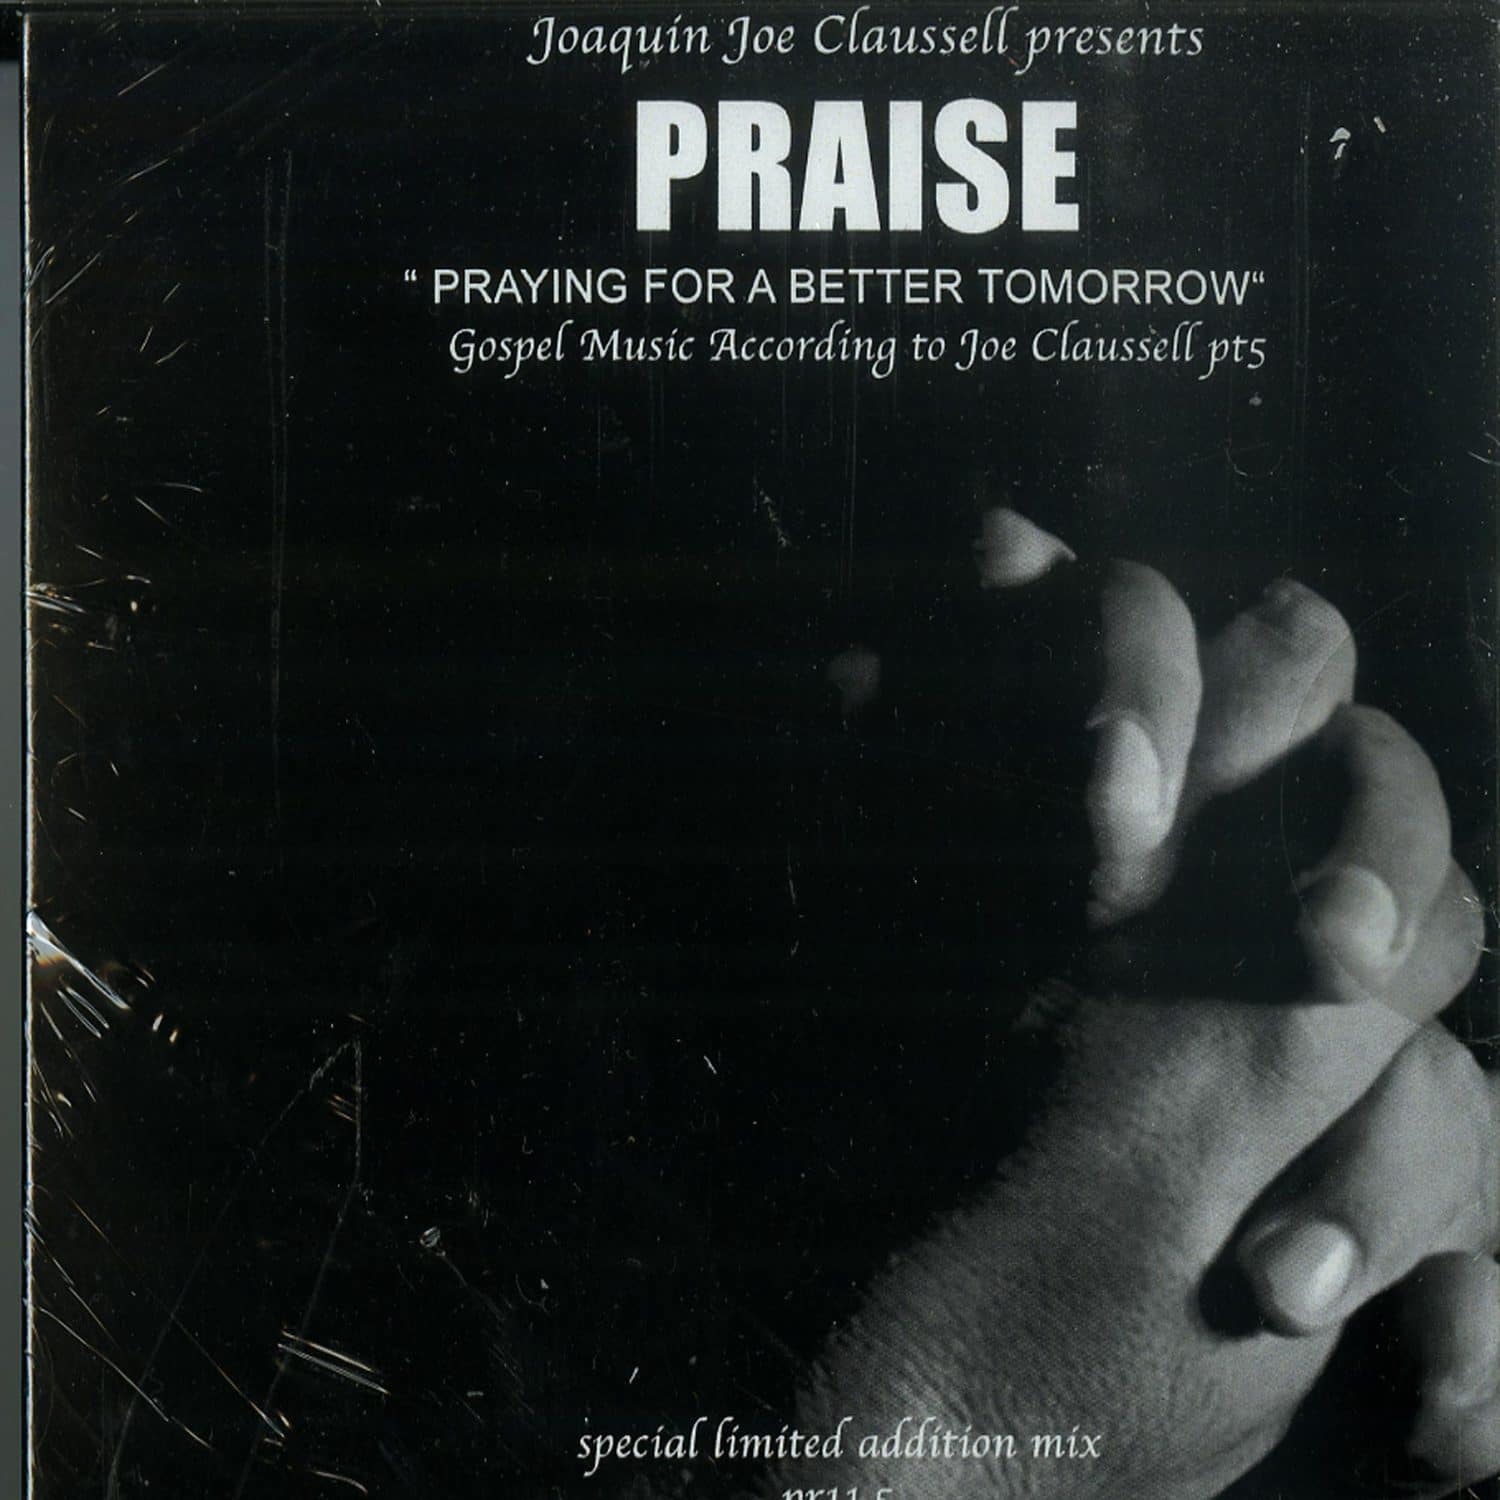 Joaquin Joe Claussell - PRAISE PART 5 -  Praying for a better tomorrow 